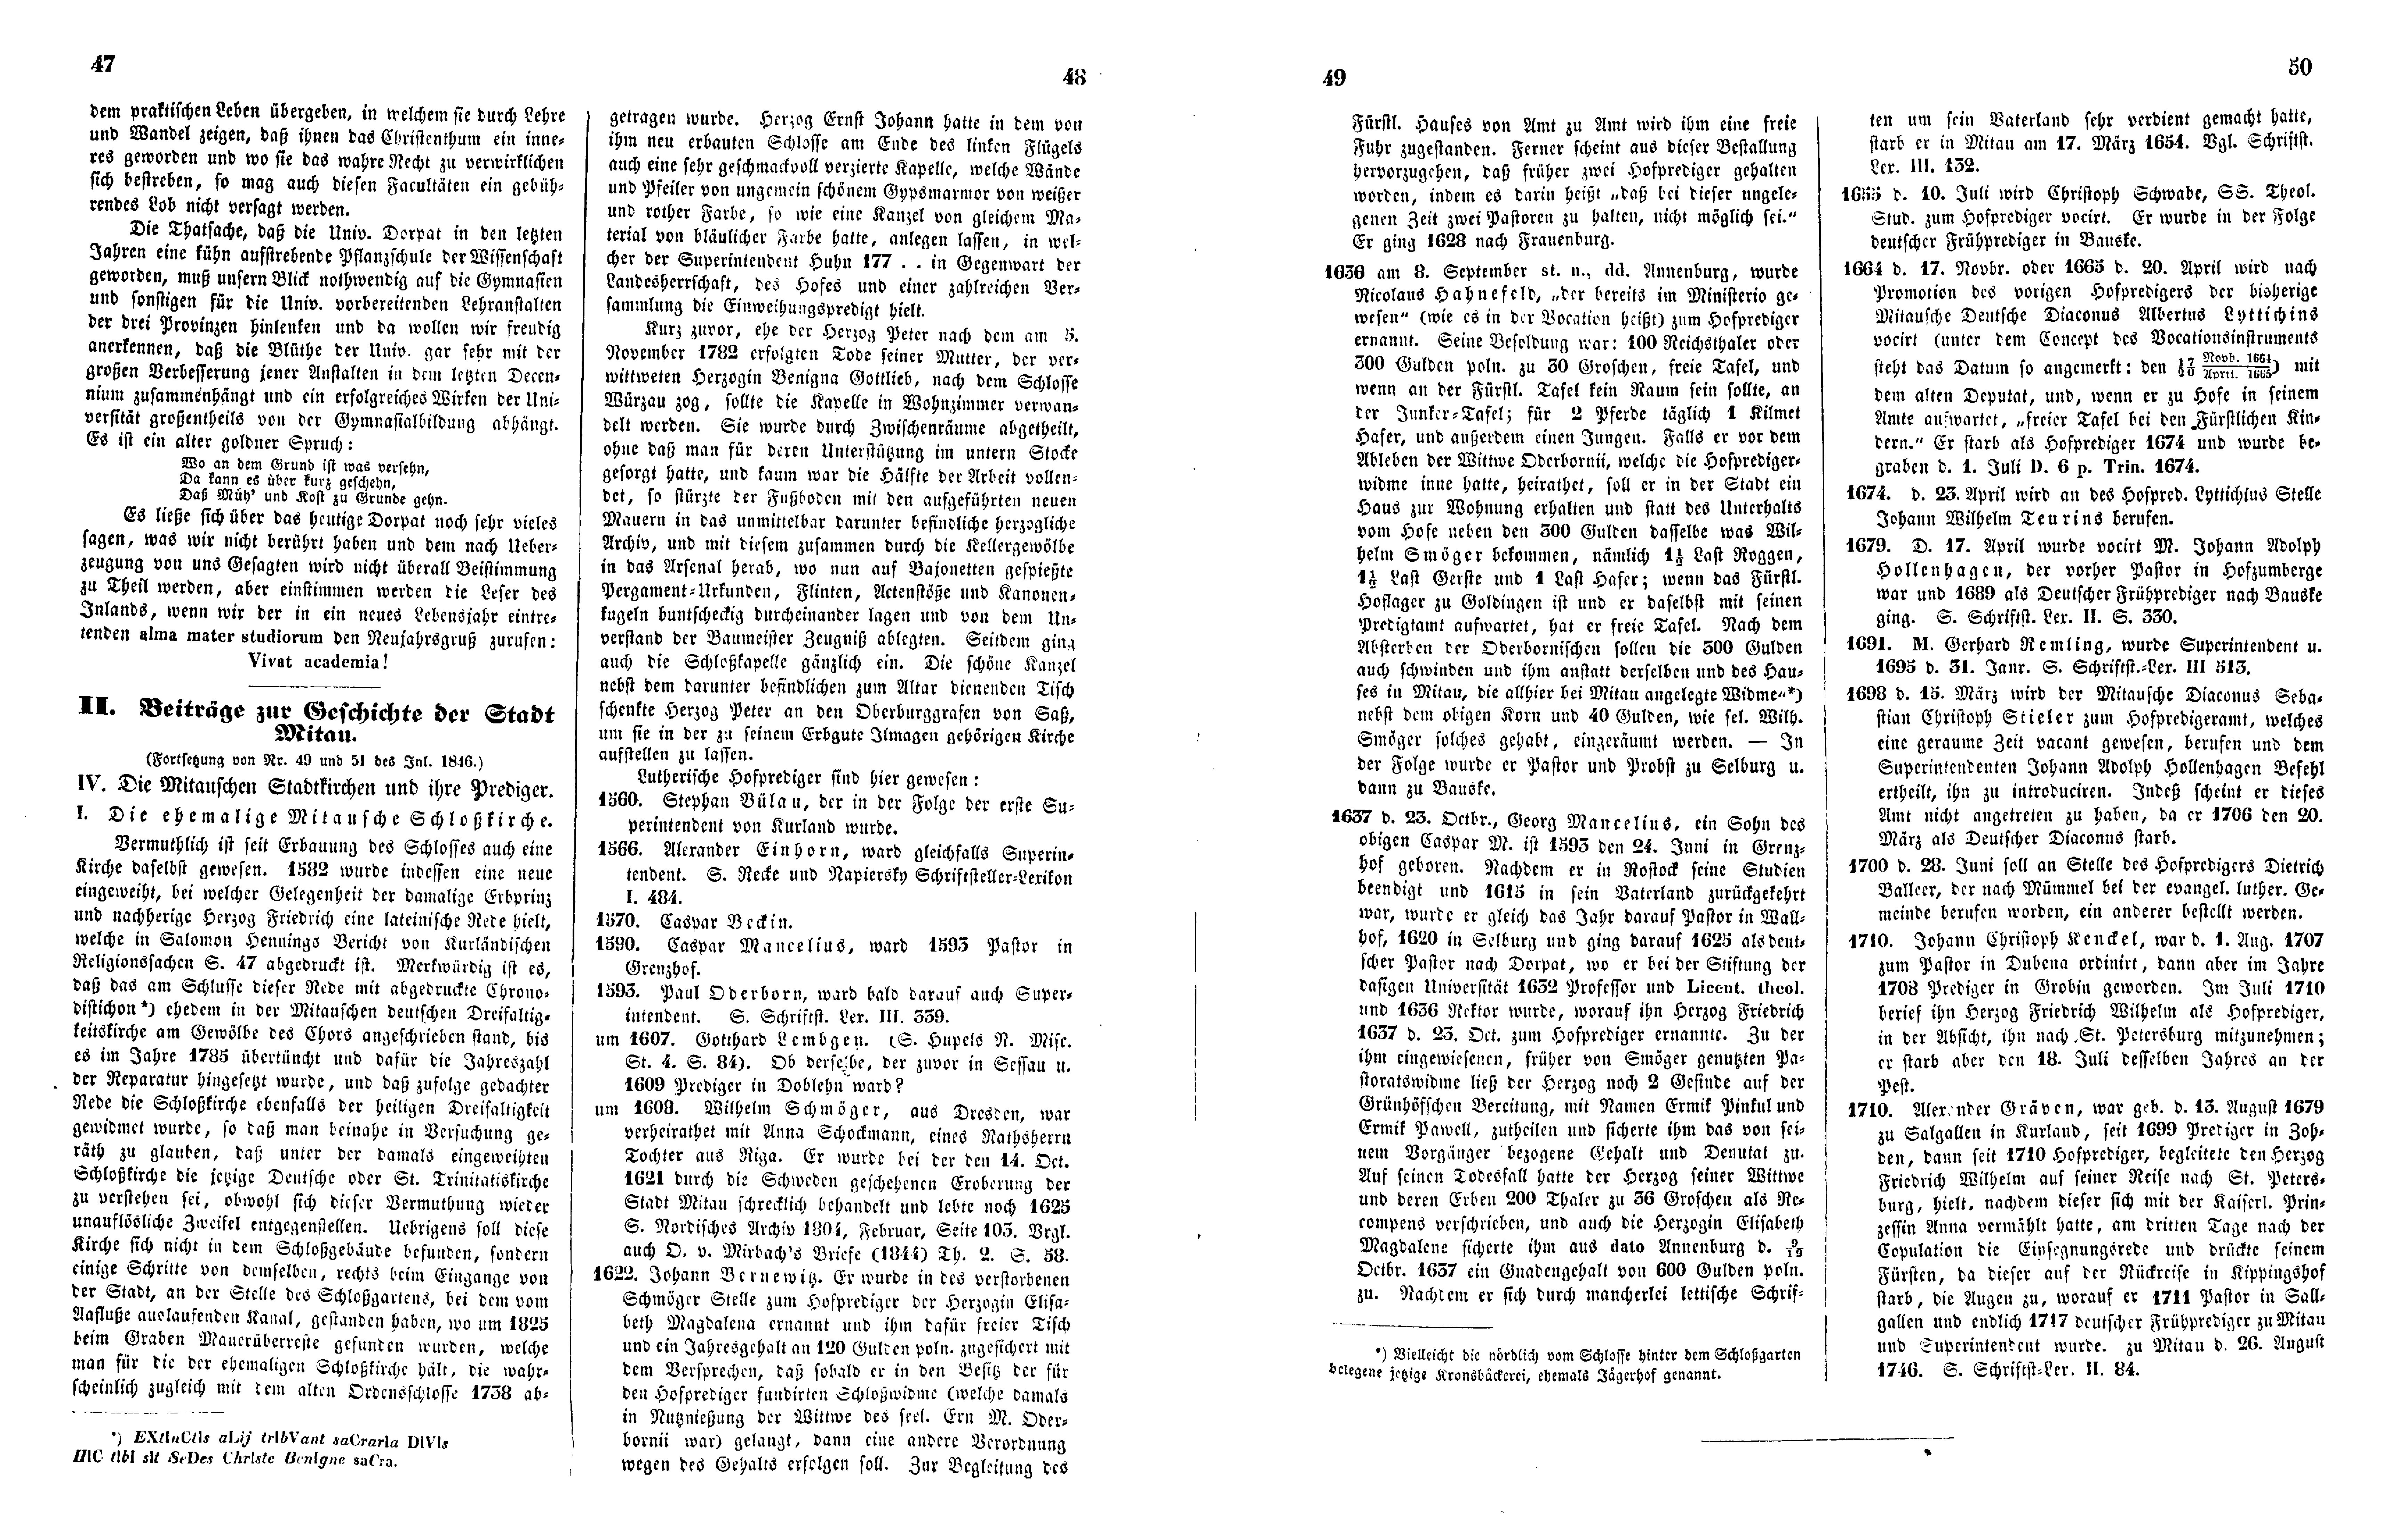 Das Inland [13] (1848) | 17. (47-50) Main body of text